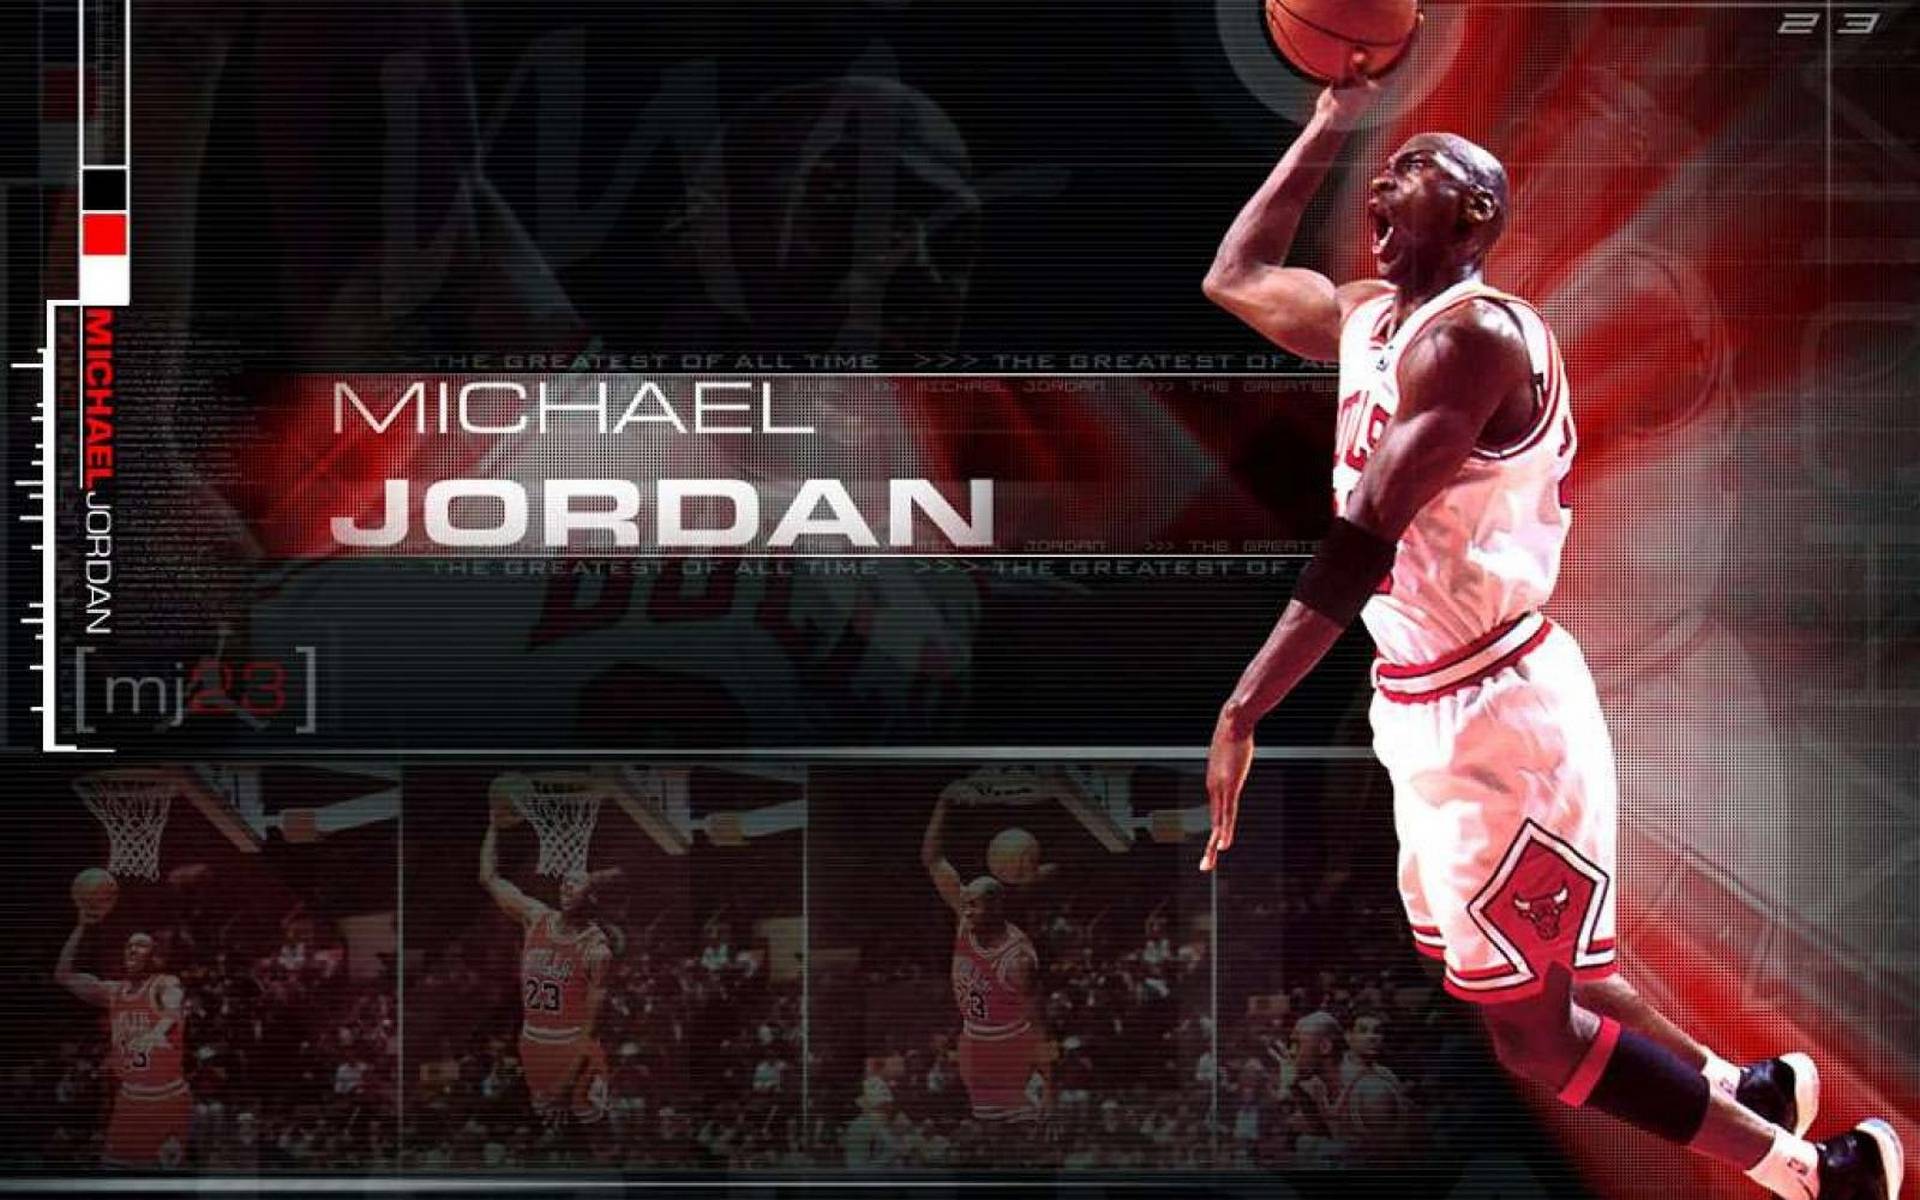 Wallpapers Michael Jordan basketball player legend on the desktop